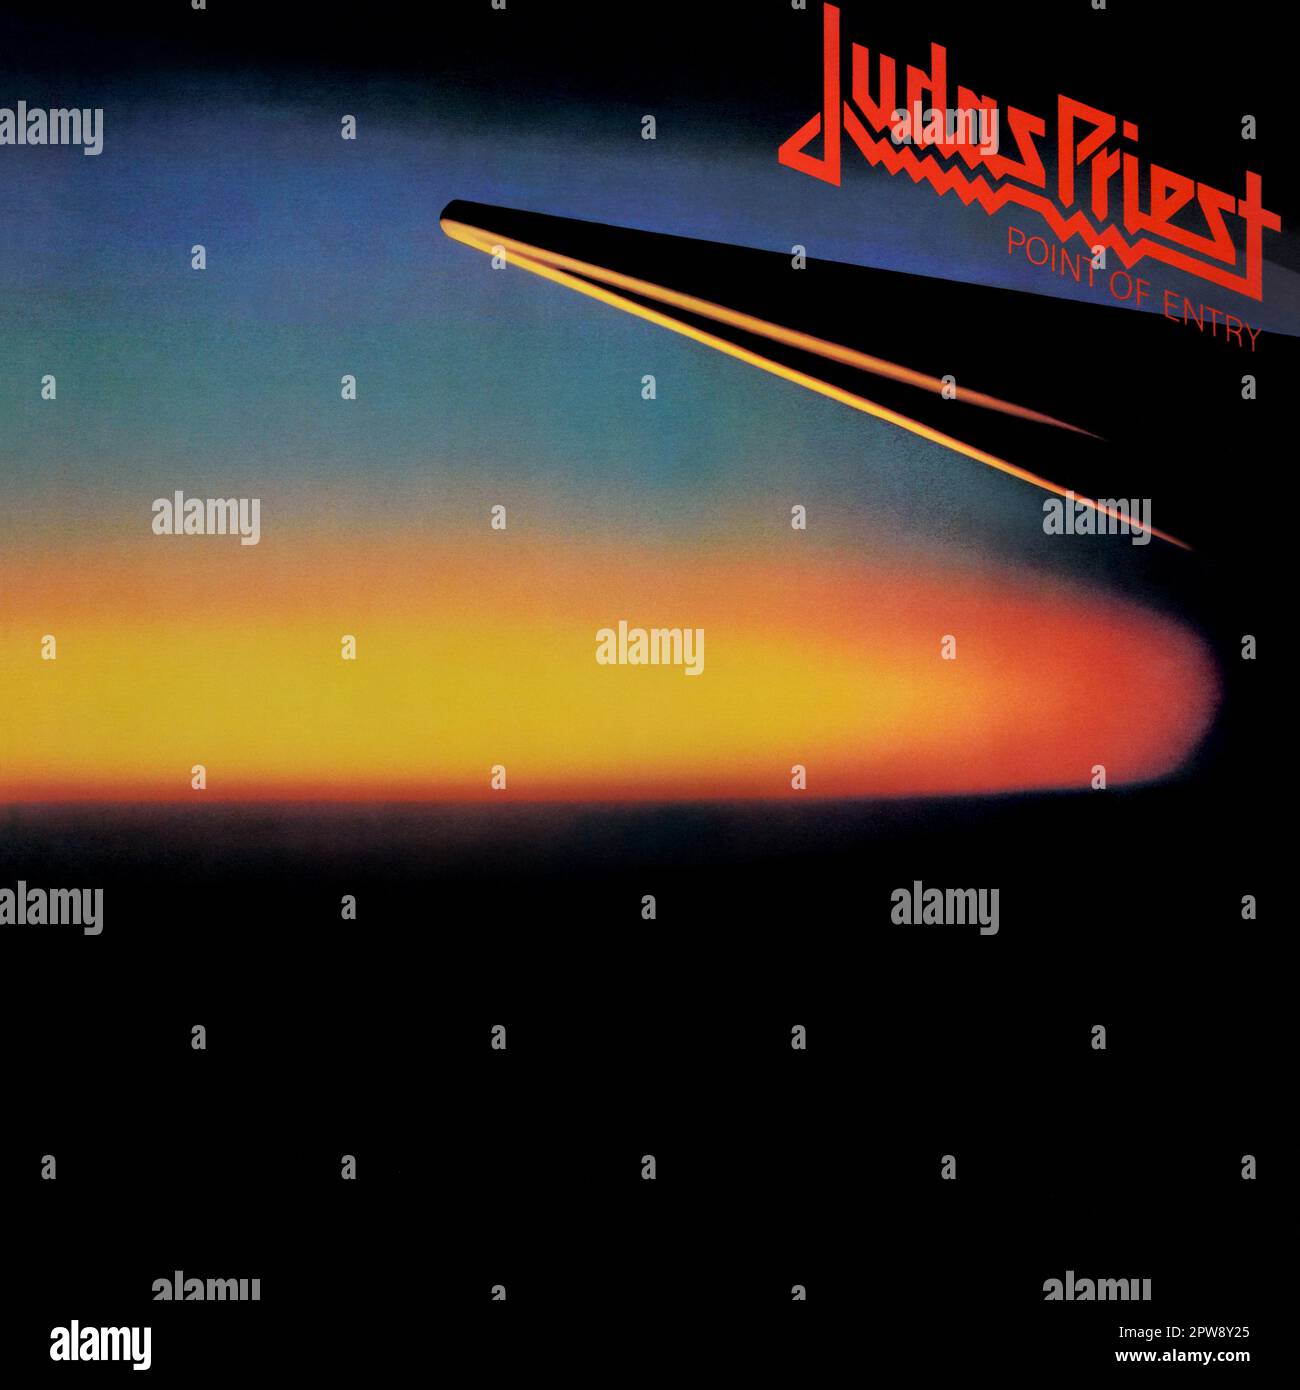 Judas Priest - copertina originale dell'album in vinile - Point of Entry - 1981 Foto Stock